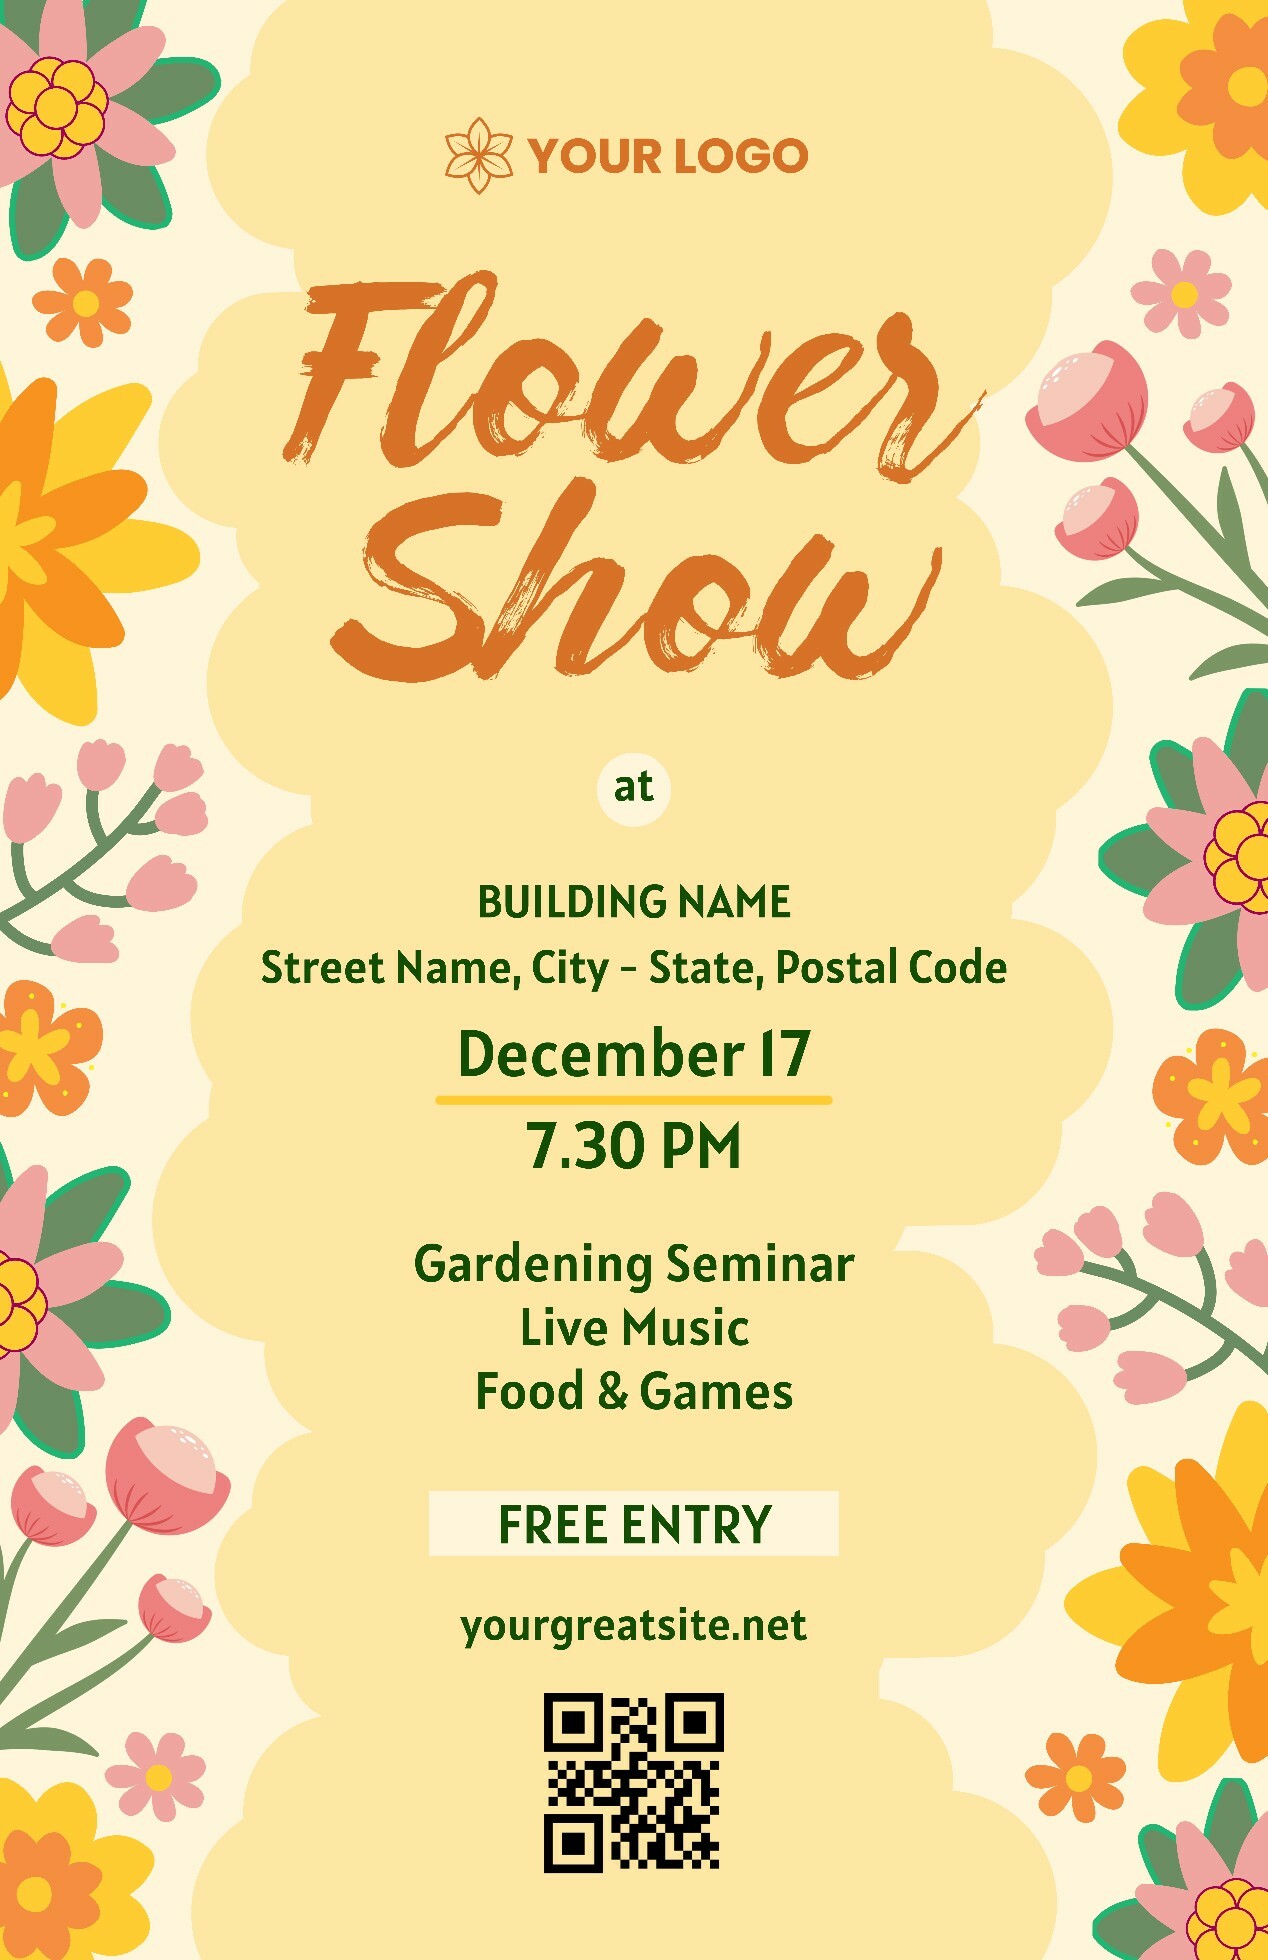 Floral Flower Show Poster